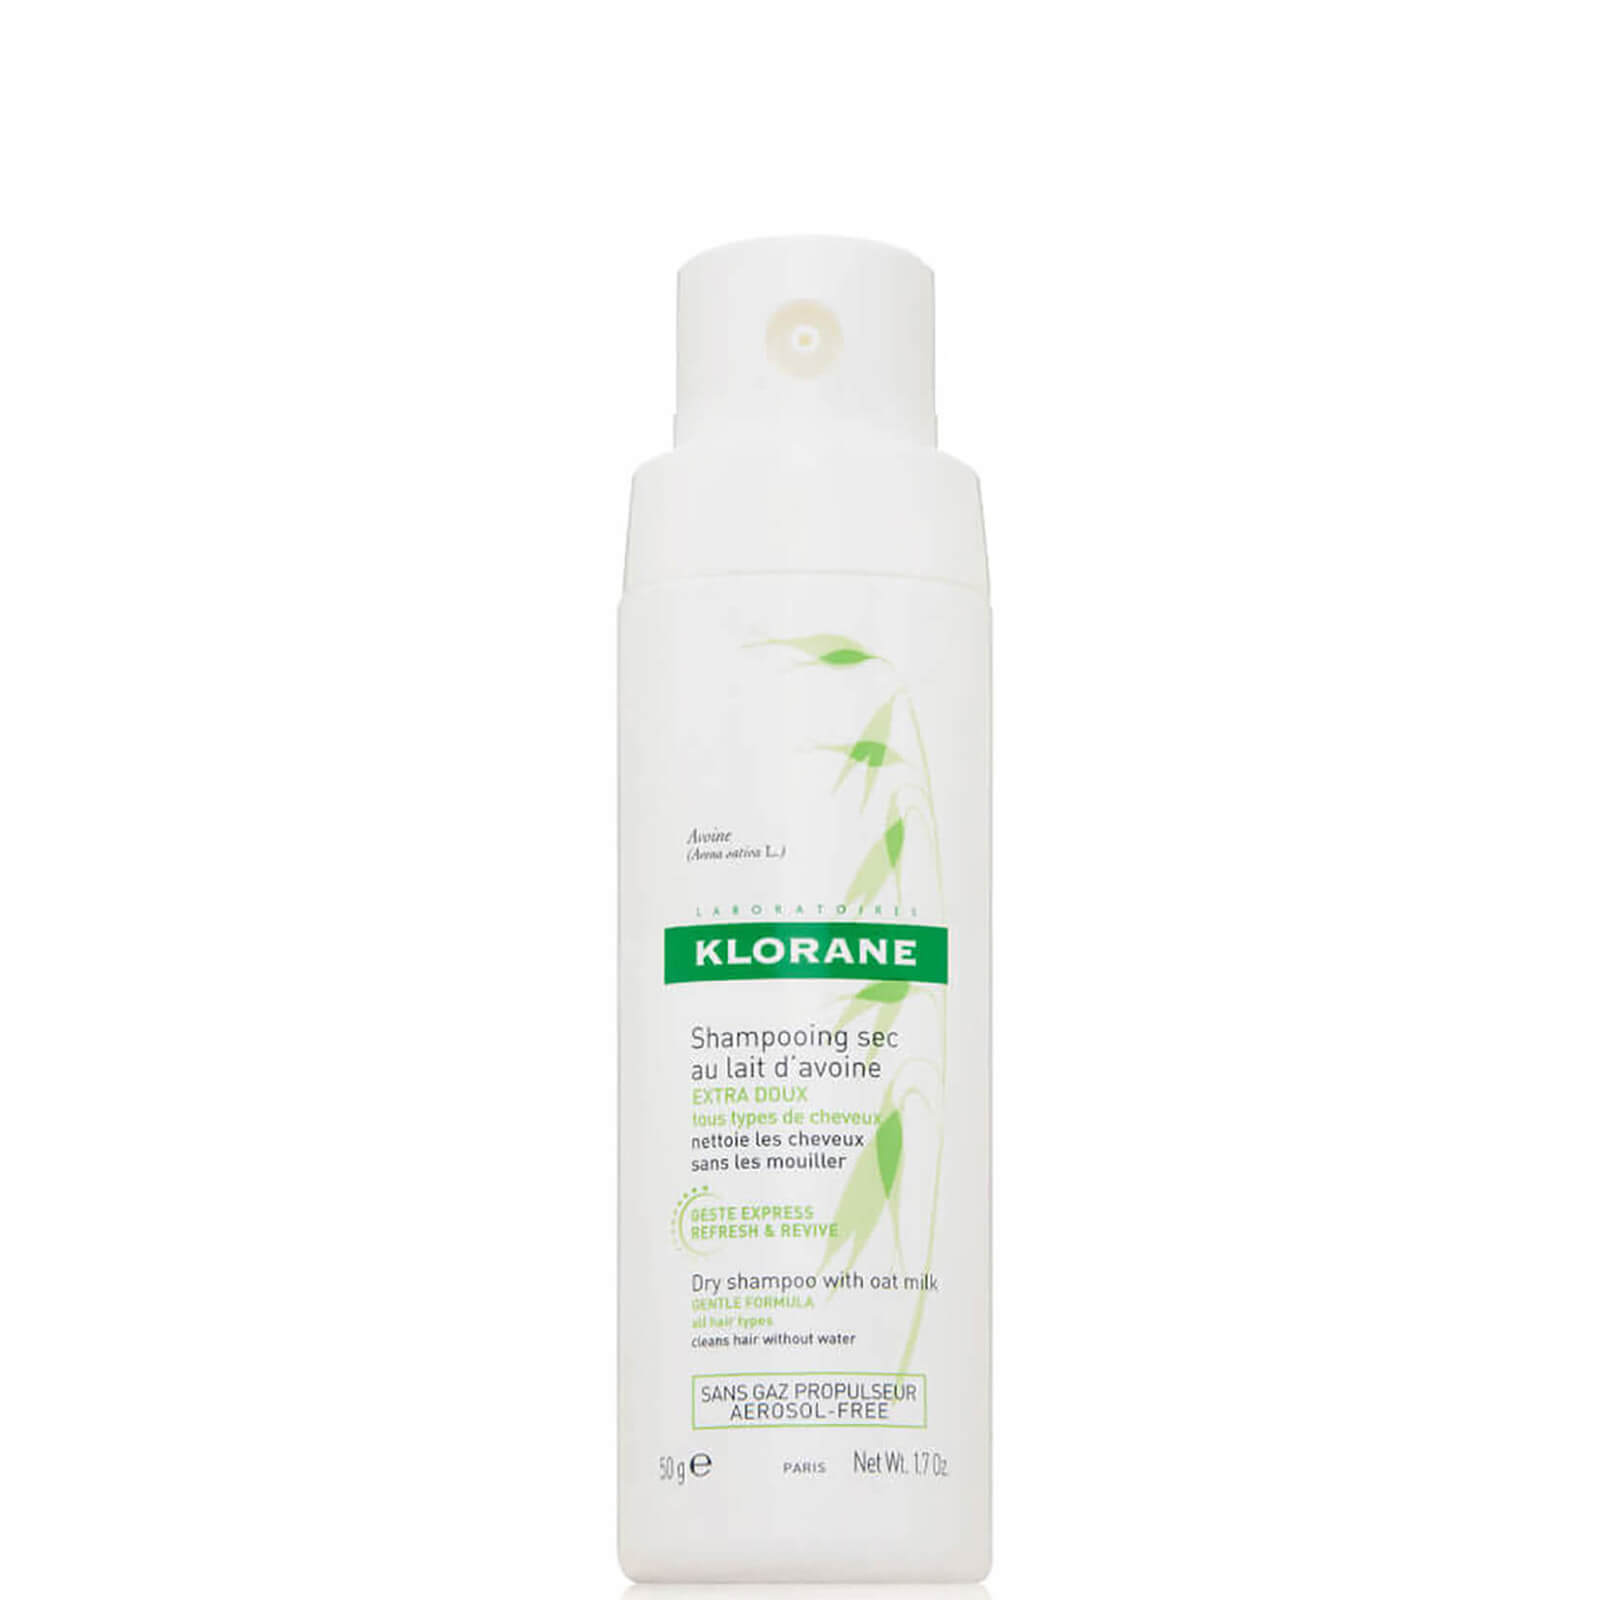 KLORANE Eco Friendly Dry Shampoo with Oat Milk 50g lookfantastic.com imagine